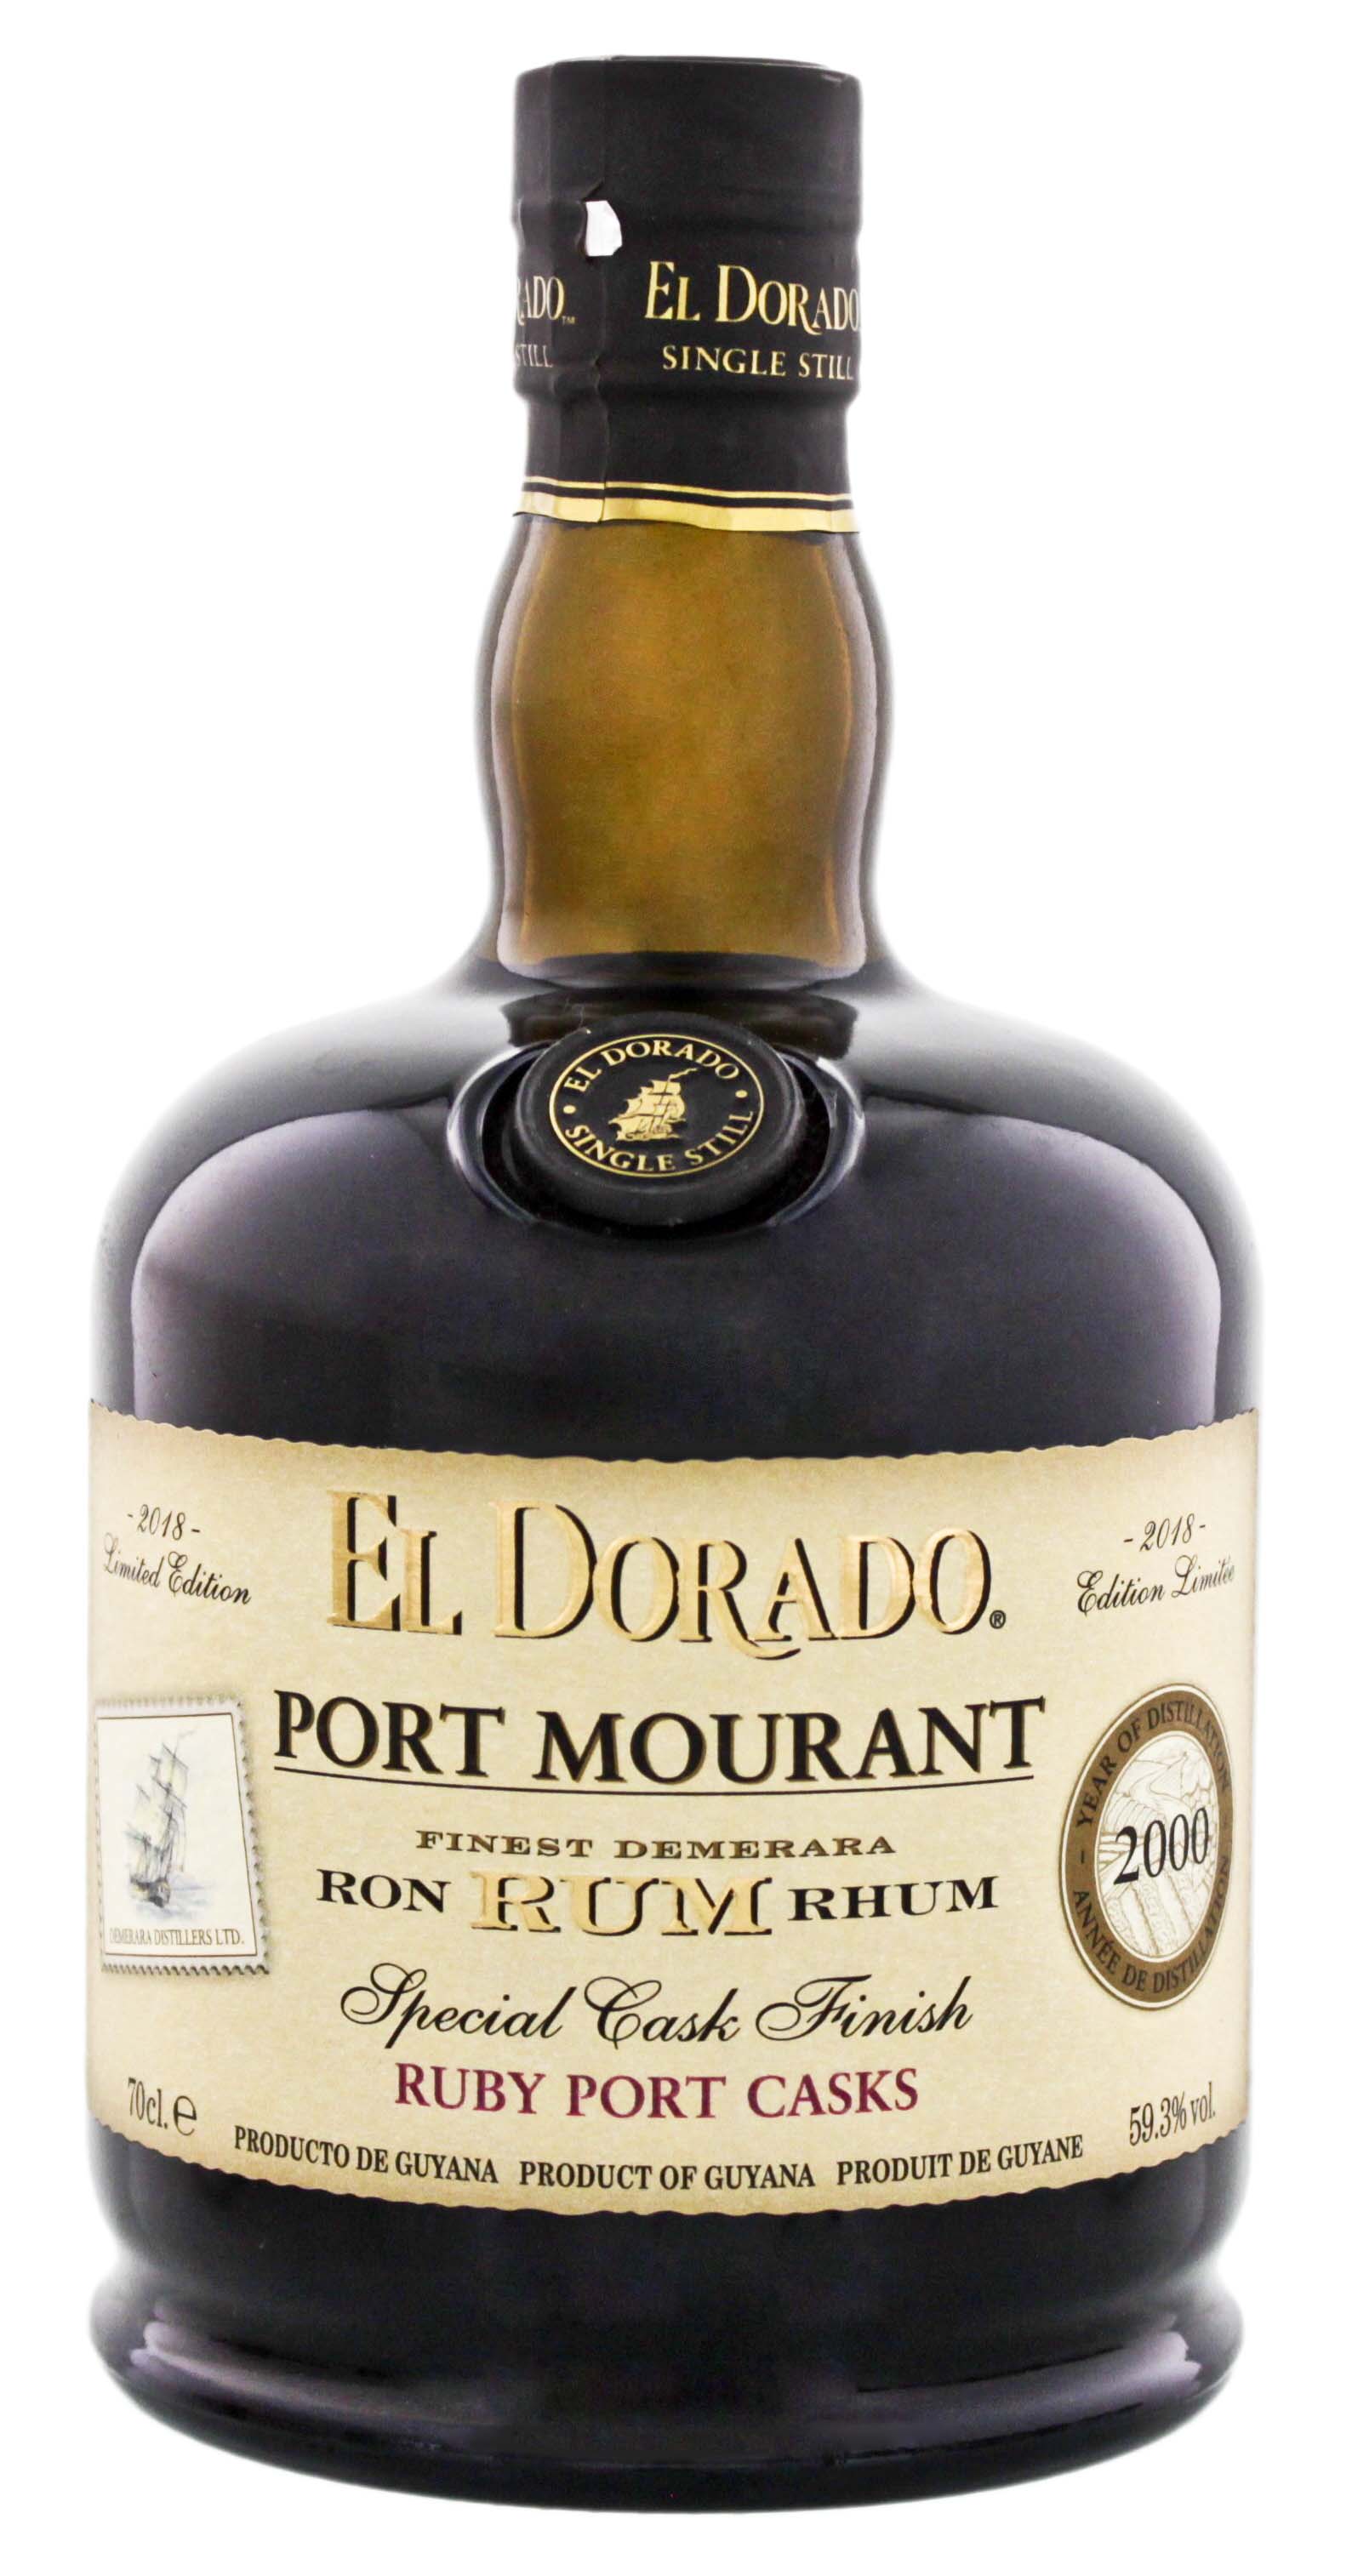 El Dorado Rum Port Mourant Ruby Port Special Cask Finish 2000 Limited Edition 2018 0,7L